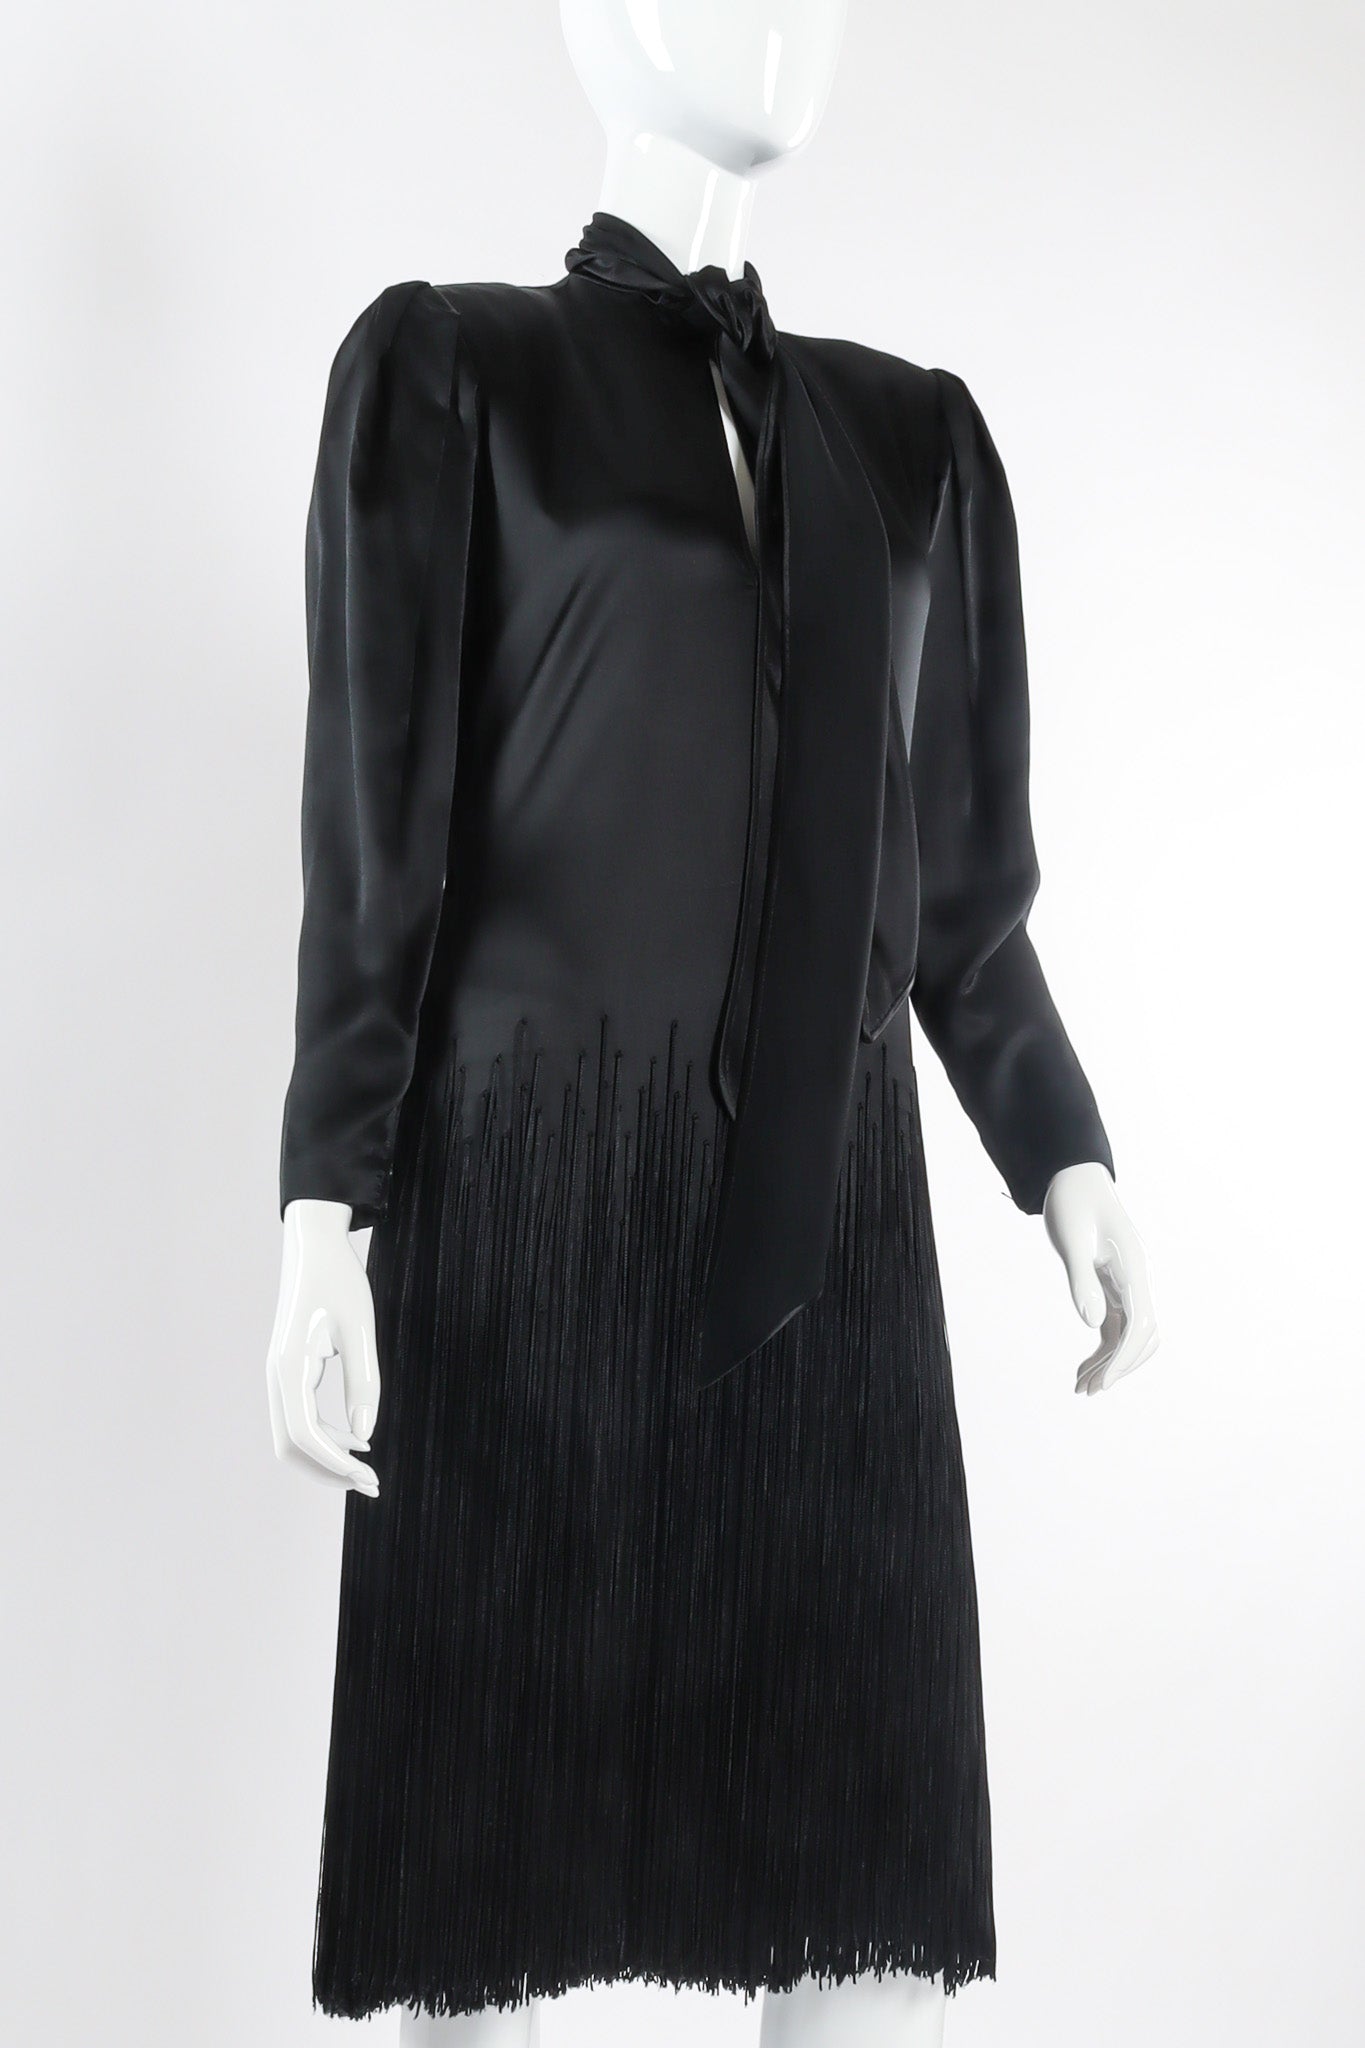 Fringe silk shift dress by Galanos Side View Close-up @recessla